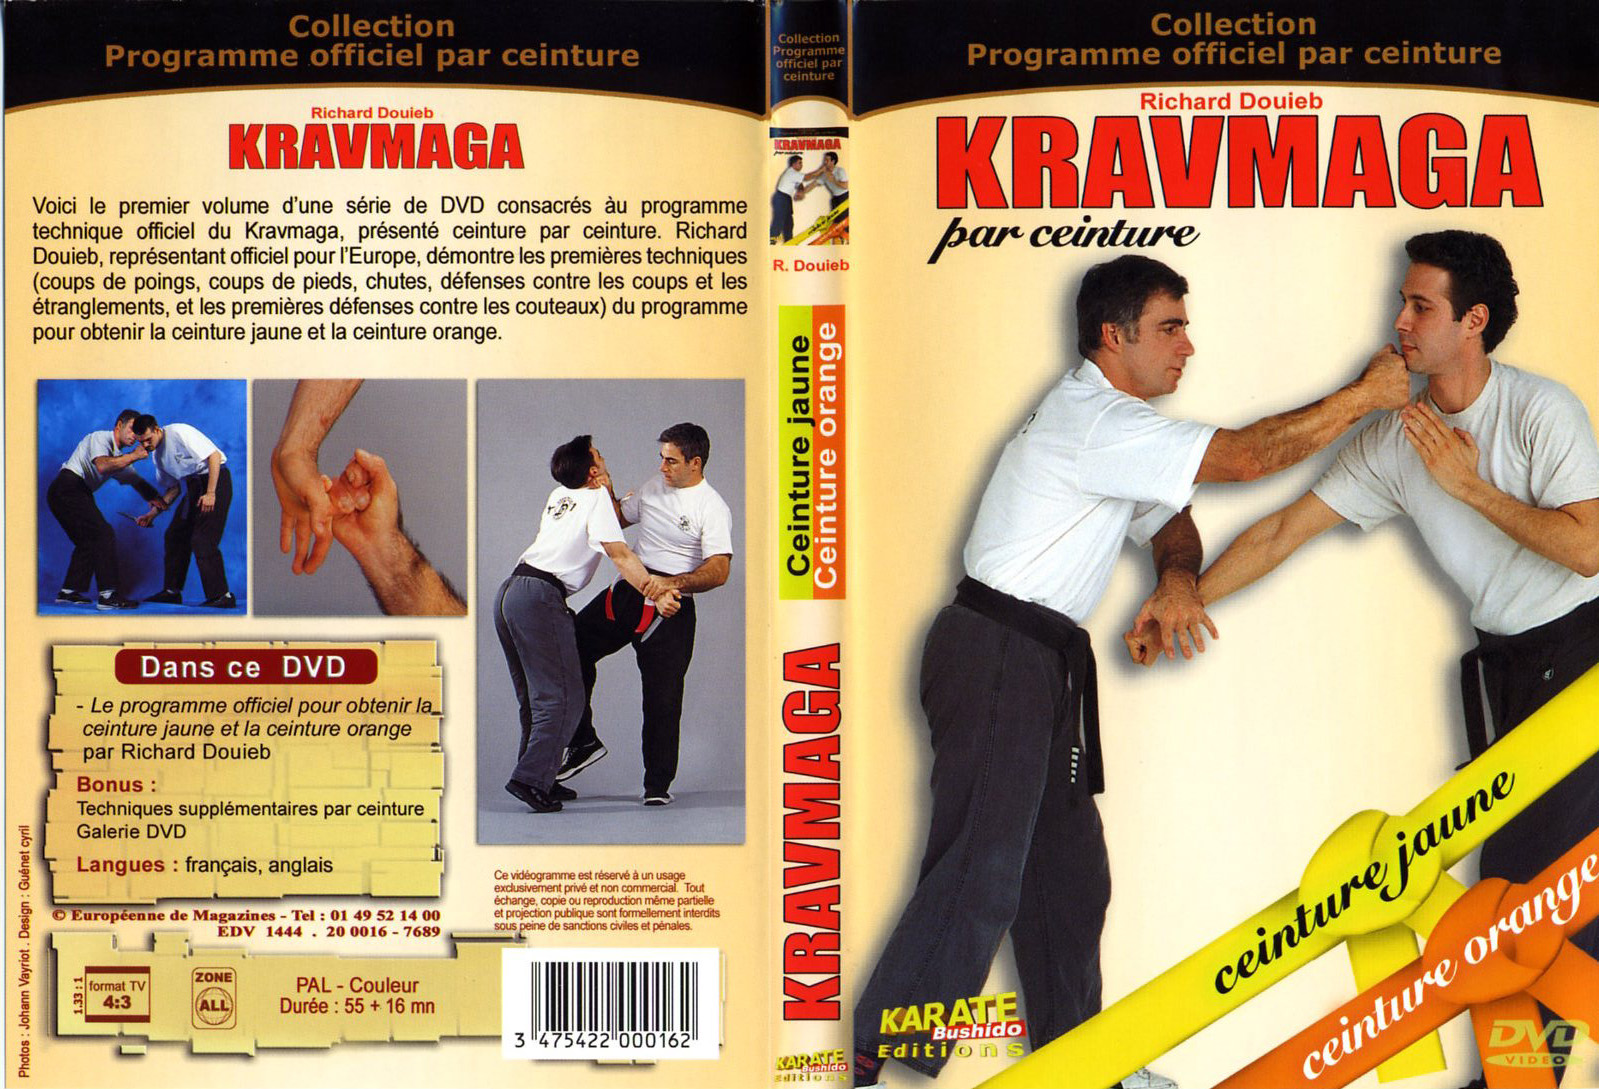 Jaquette DVD Kravmaga par ceinture - ceinture jaune orange